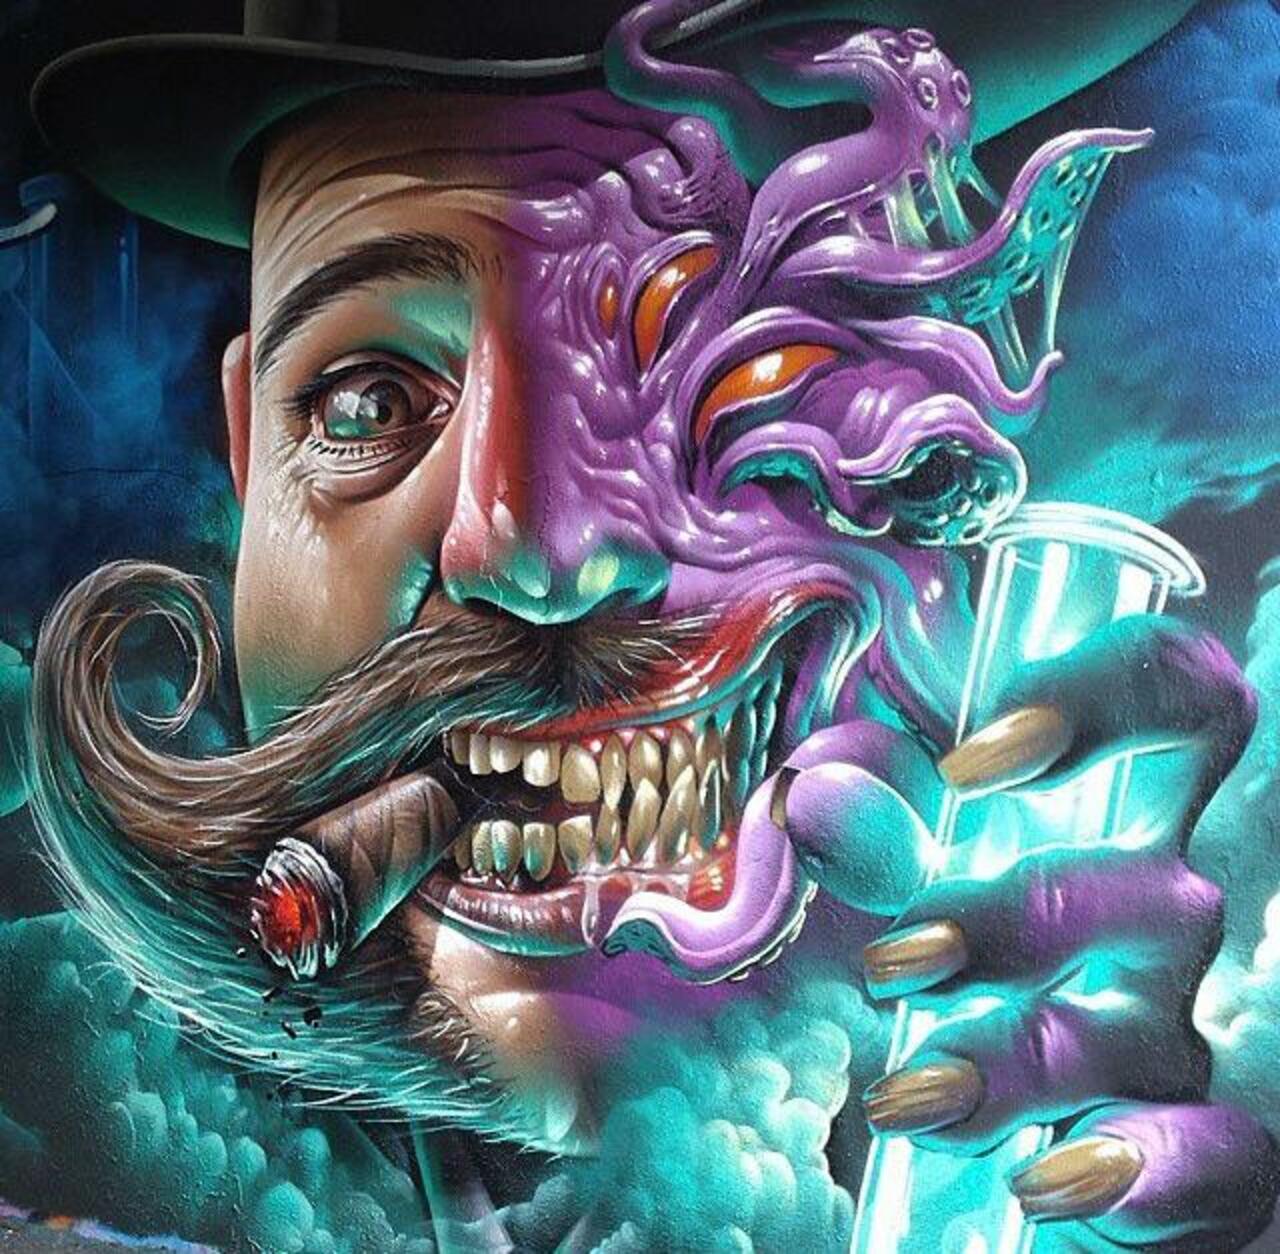 Street Art colab of Dr. Jekyll & Mr. Hyde. 
1/2 each by SmugOne & Saturnoart 

#art #arte #graffiti #streetart http://t.co/esn1hC1D1J